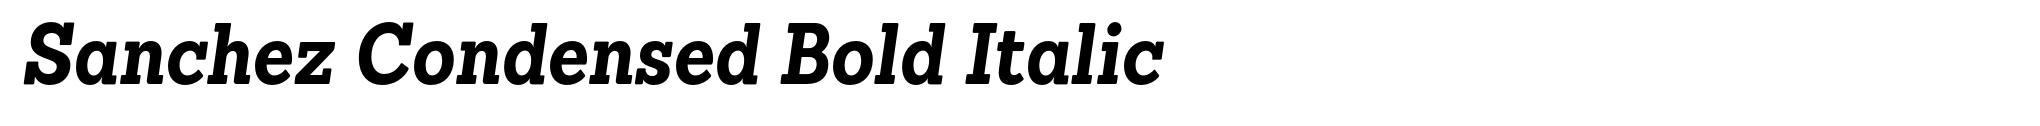 Sanchez Condensed Bold Italic image